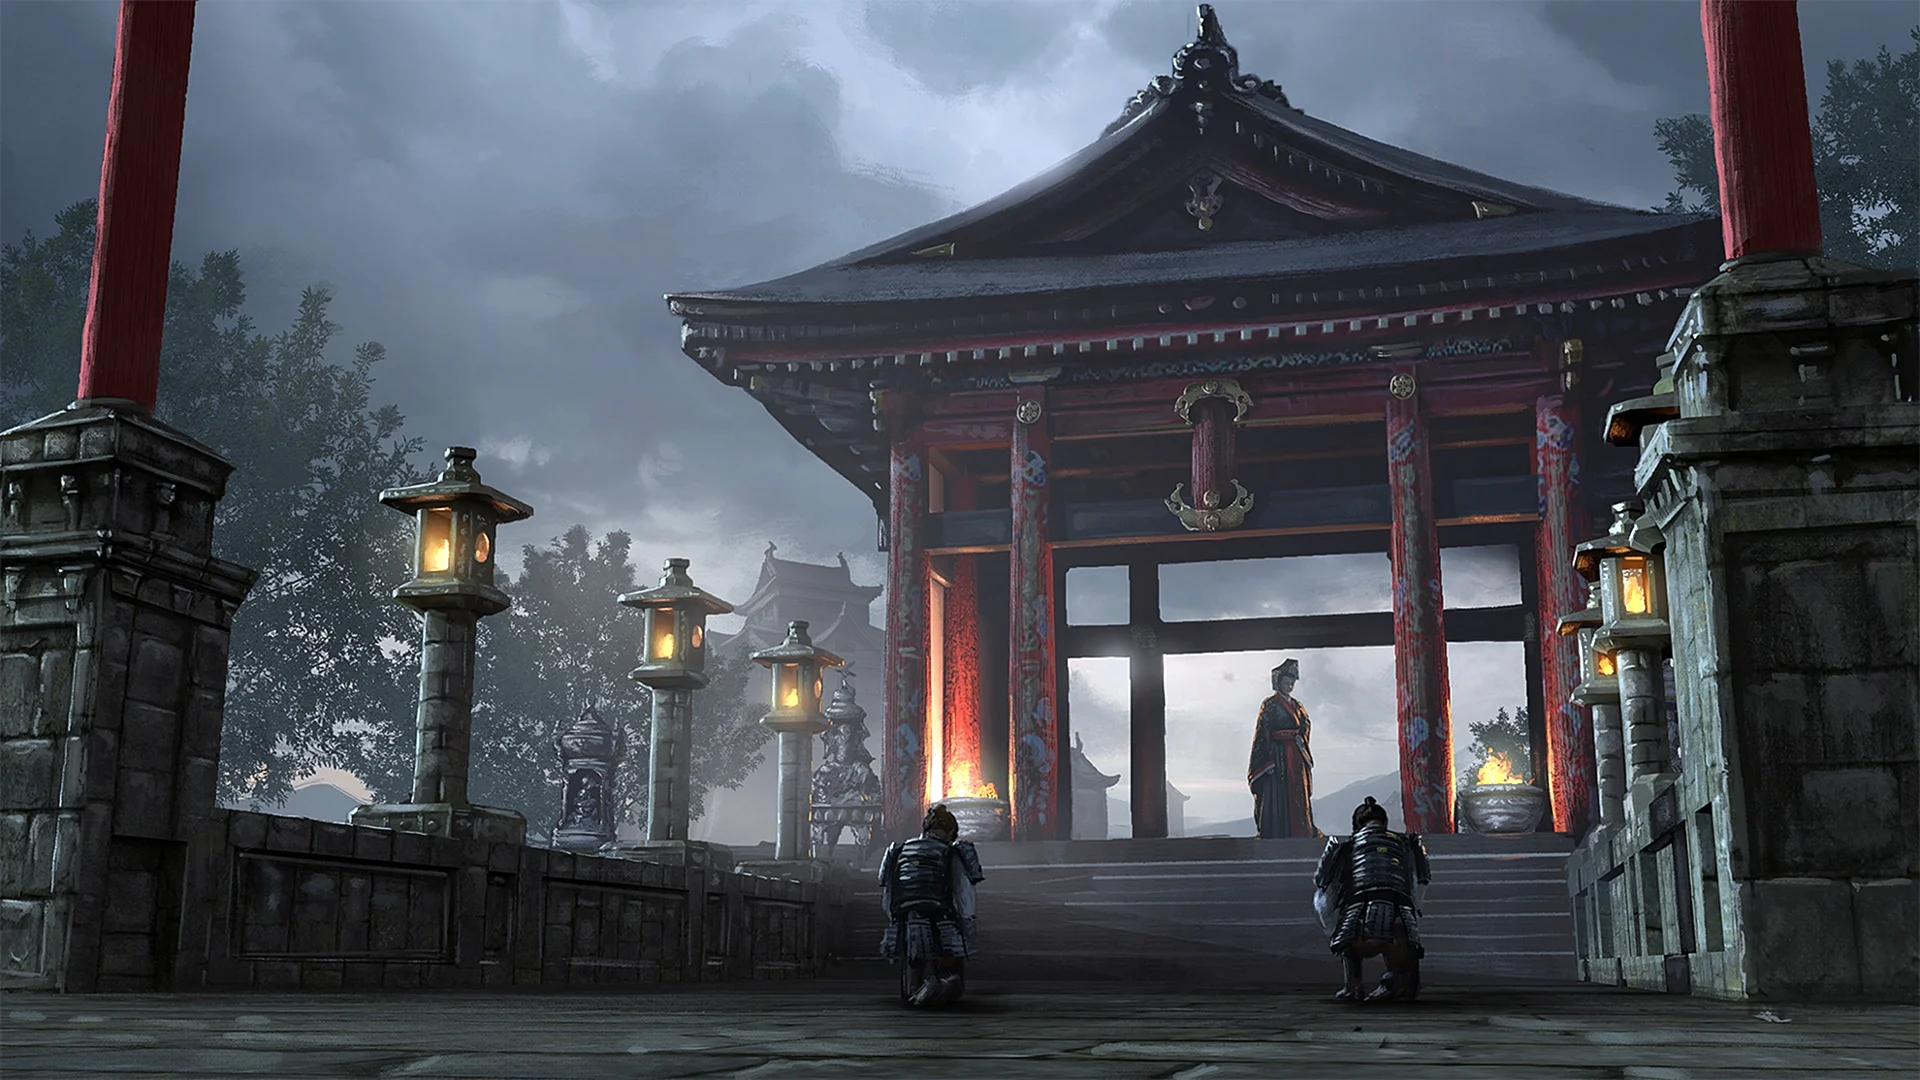 Храм самураев в Японии